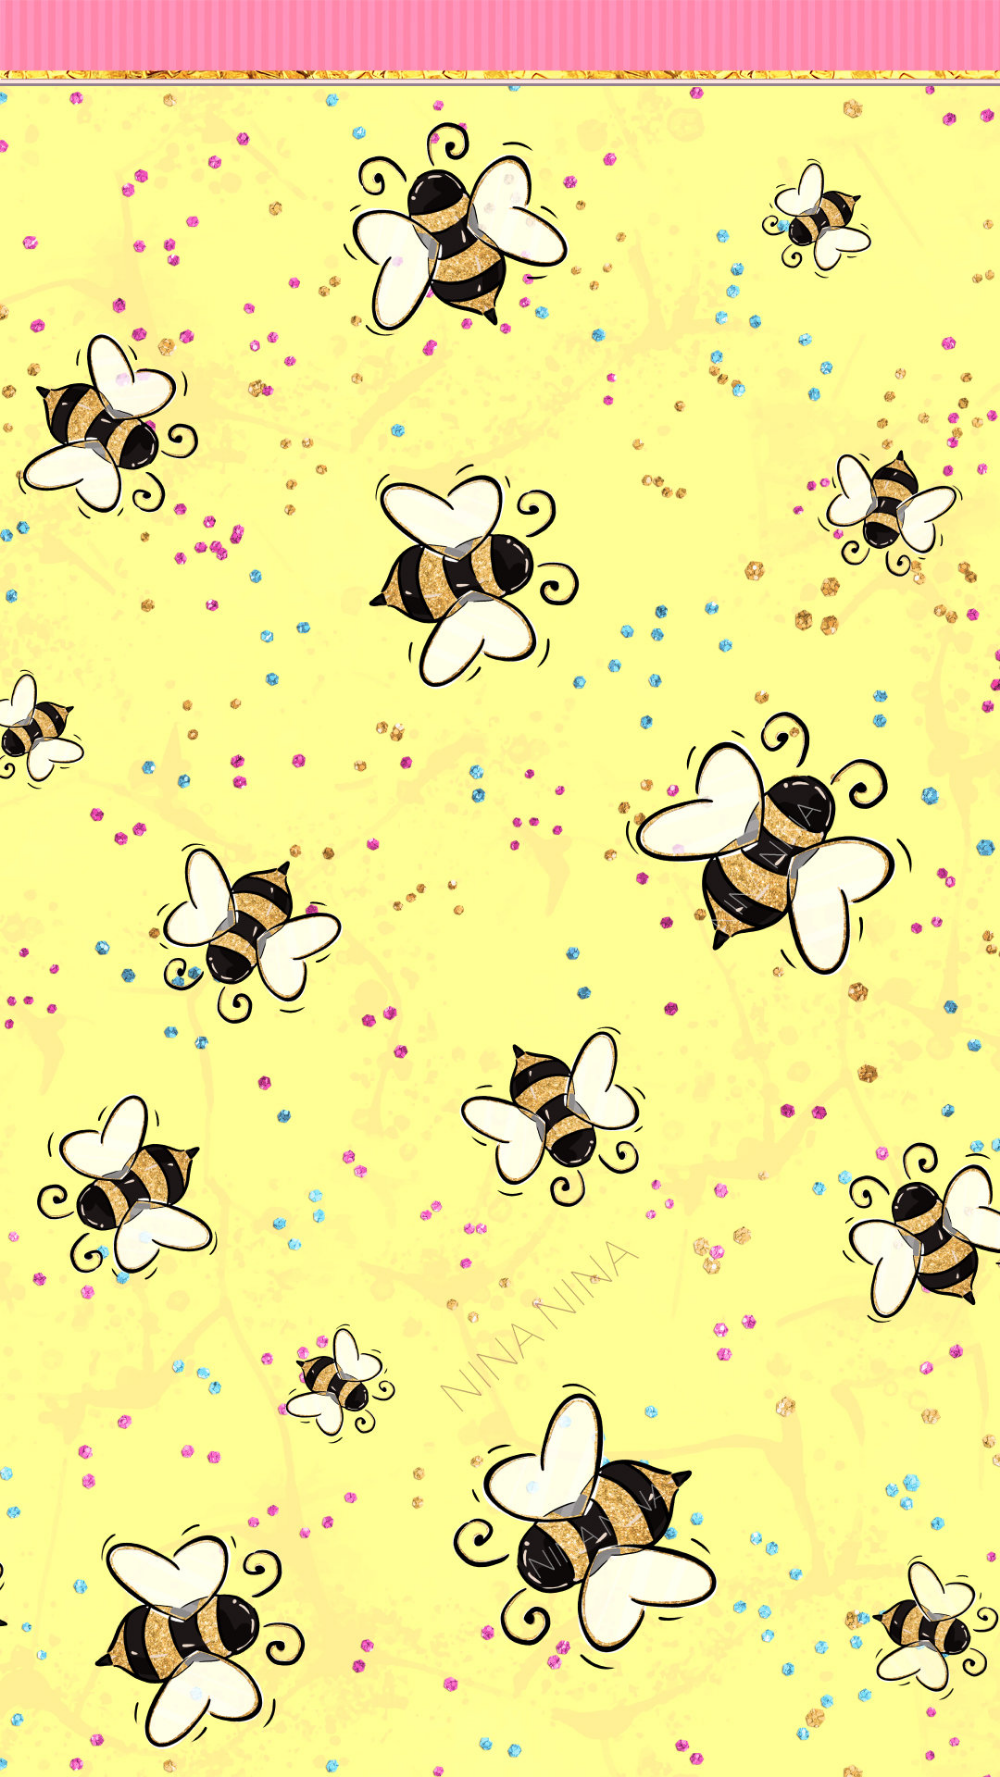 Cute Bee Wallpaper, Summer Clipart, Tropical, Beach, Yellow. Etsy Free Wallpaper 1080x1920 Nina Nina #wallpape. Teddy bear clipart, Cute wallpaper, Bear clipart